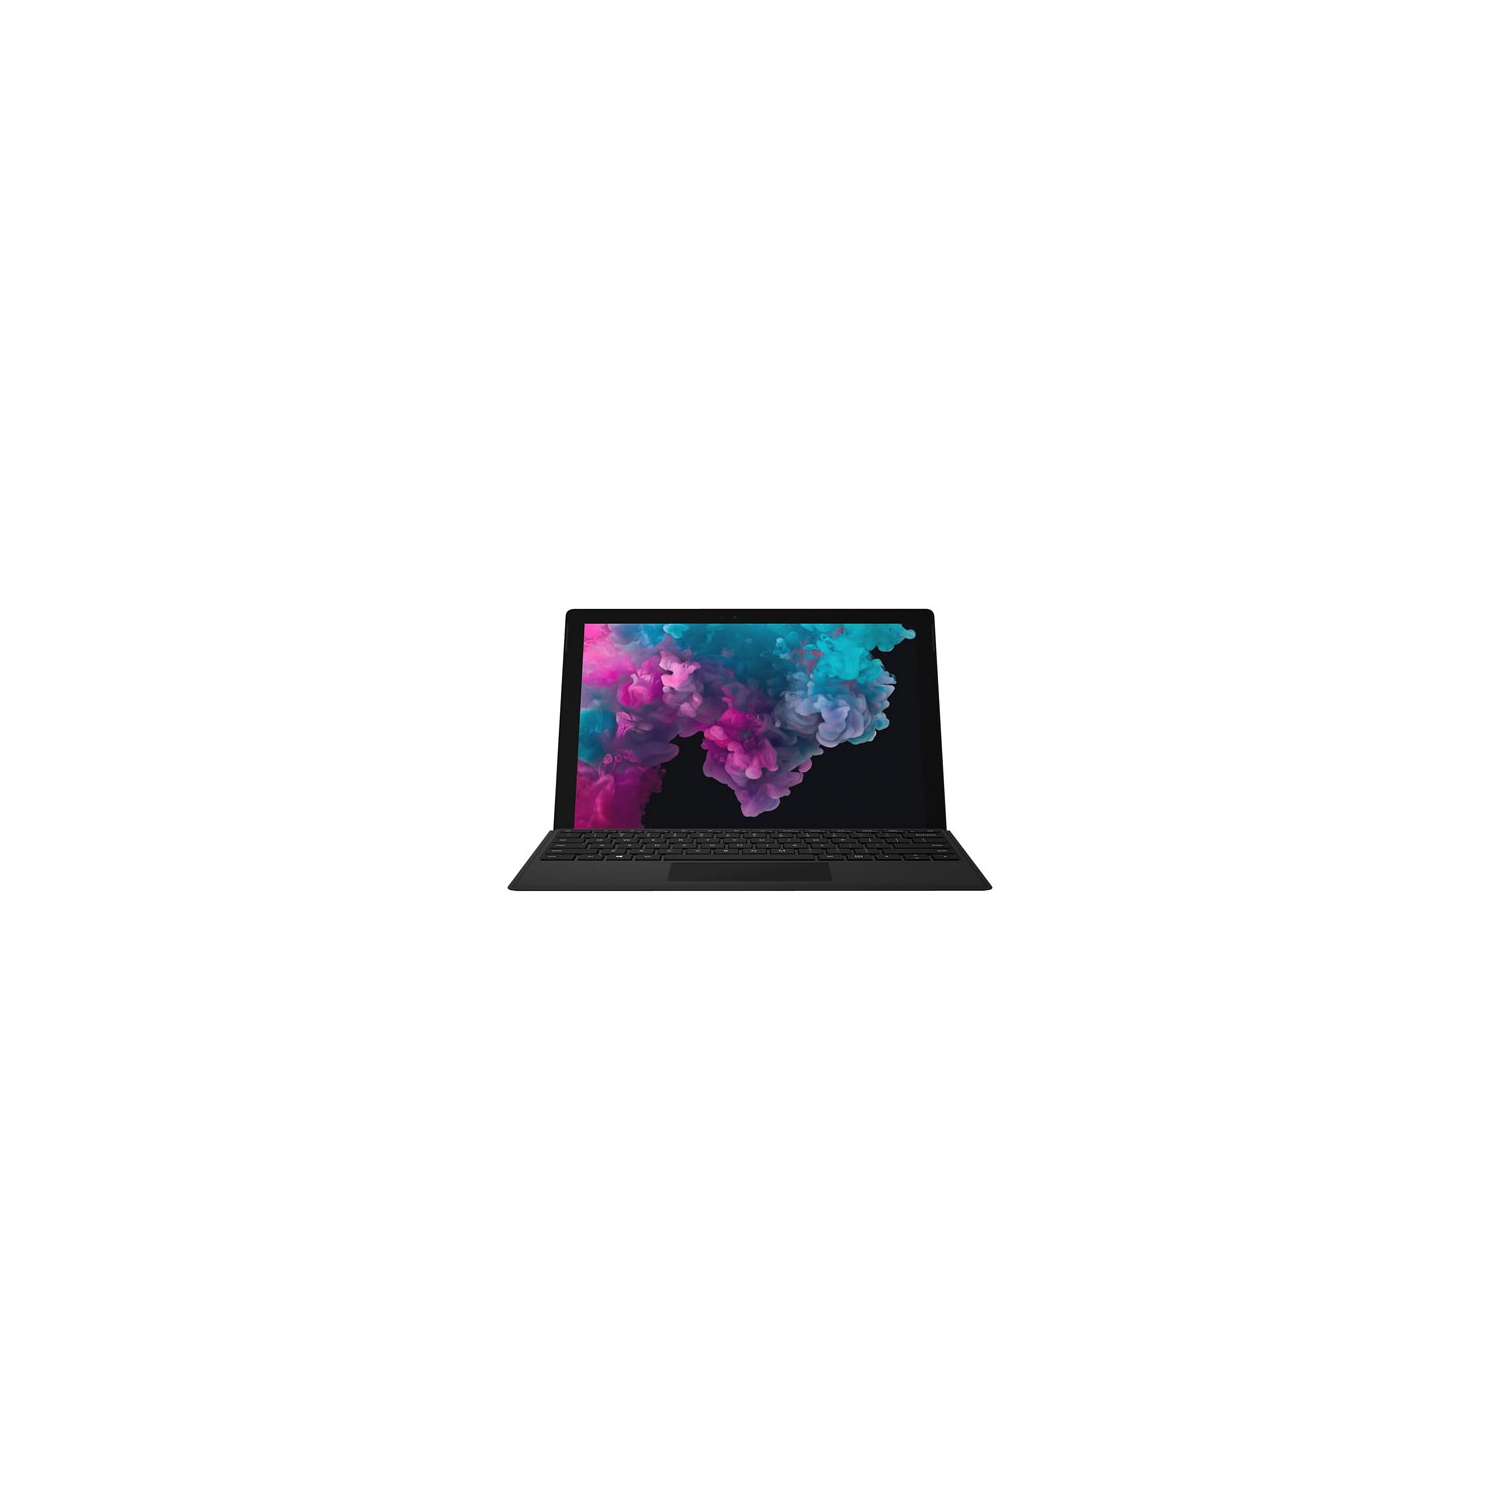 Refurbished (Good) - Microsoft Surface Pro 6 Laptop Intel i5-8250U